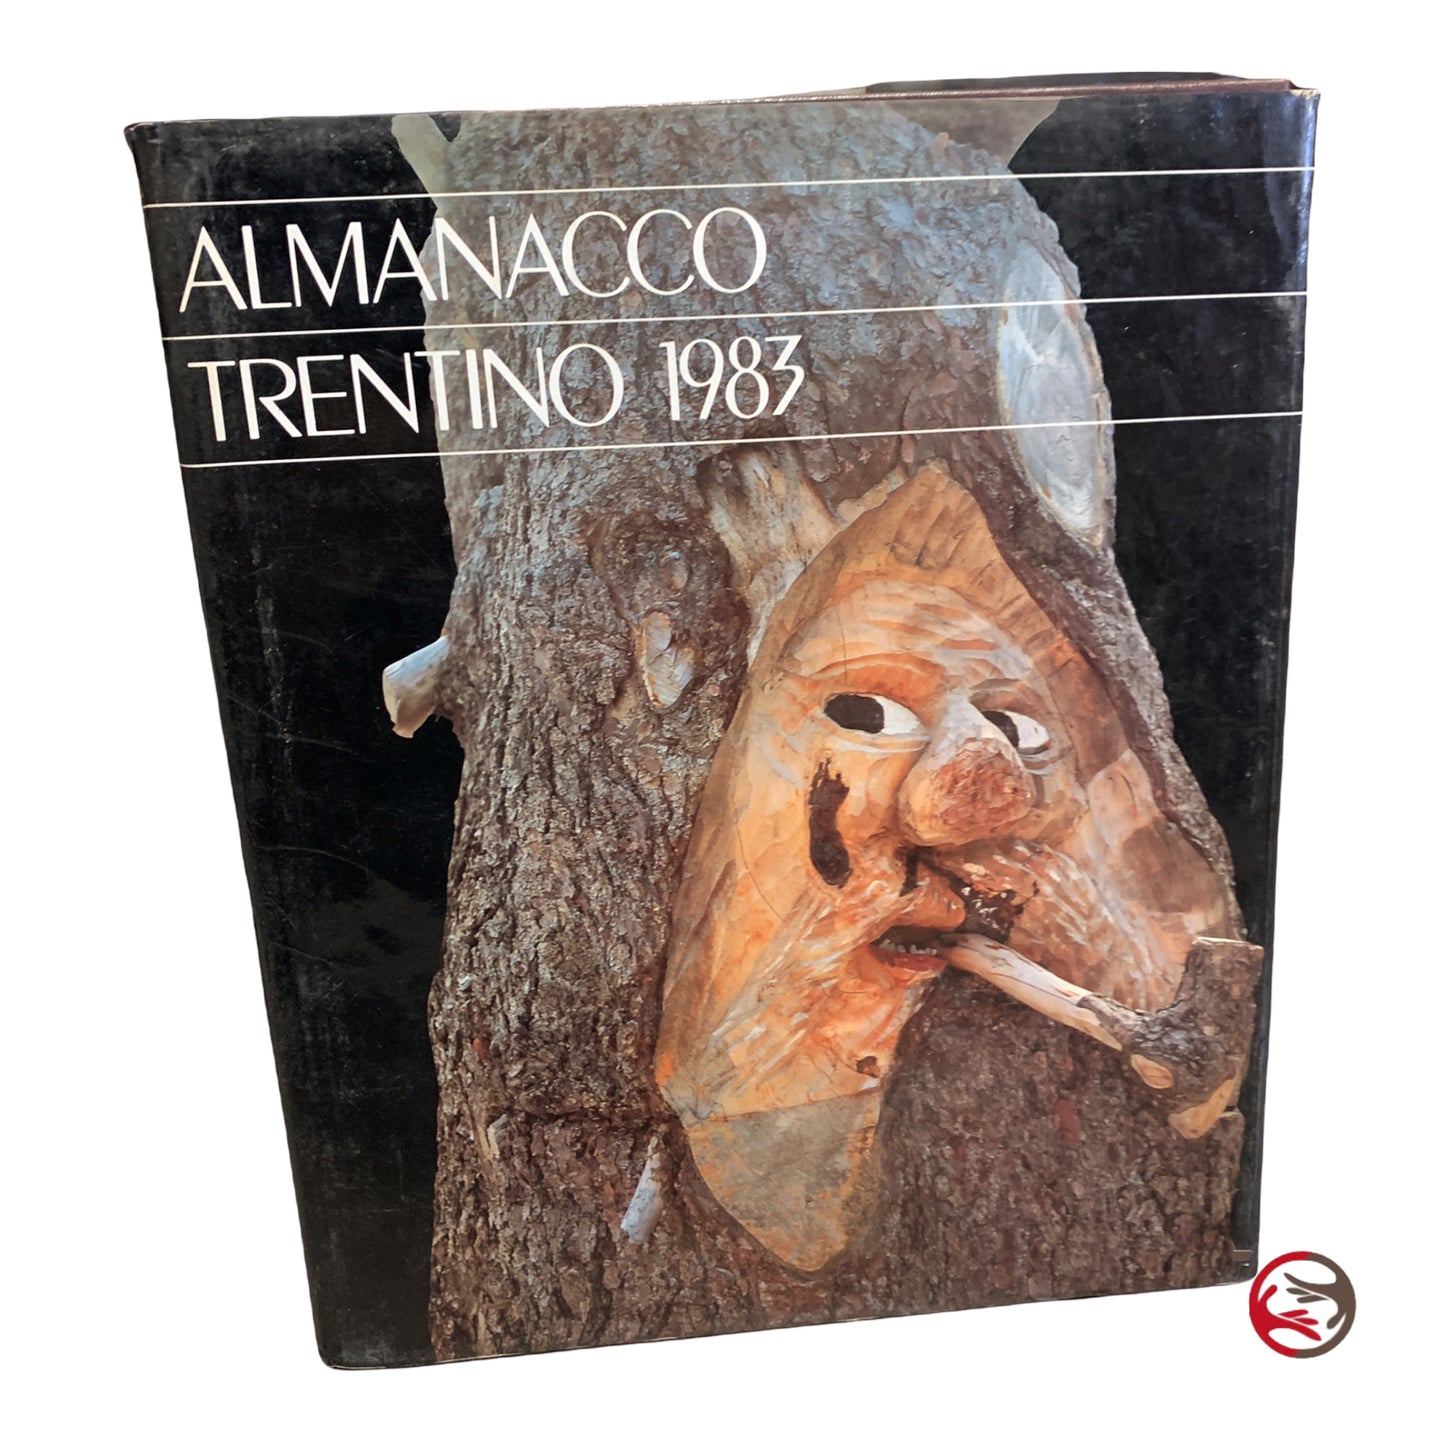 Almanac Trentino 1983